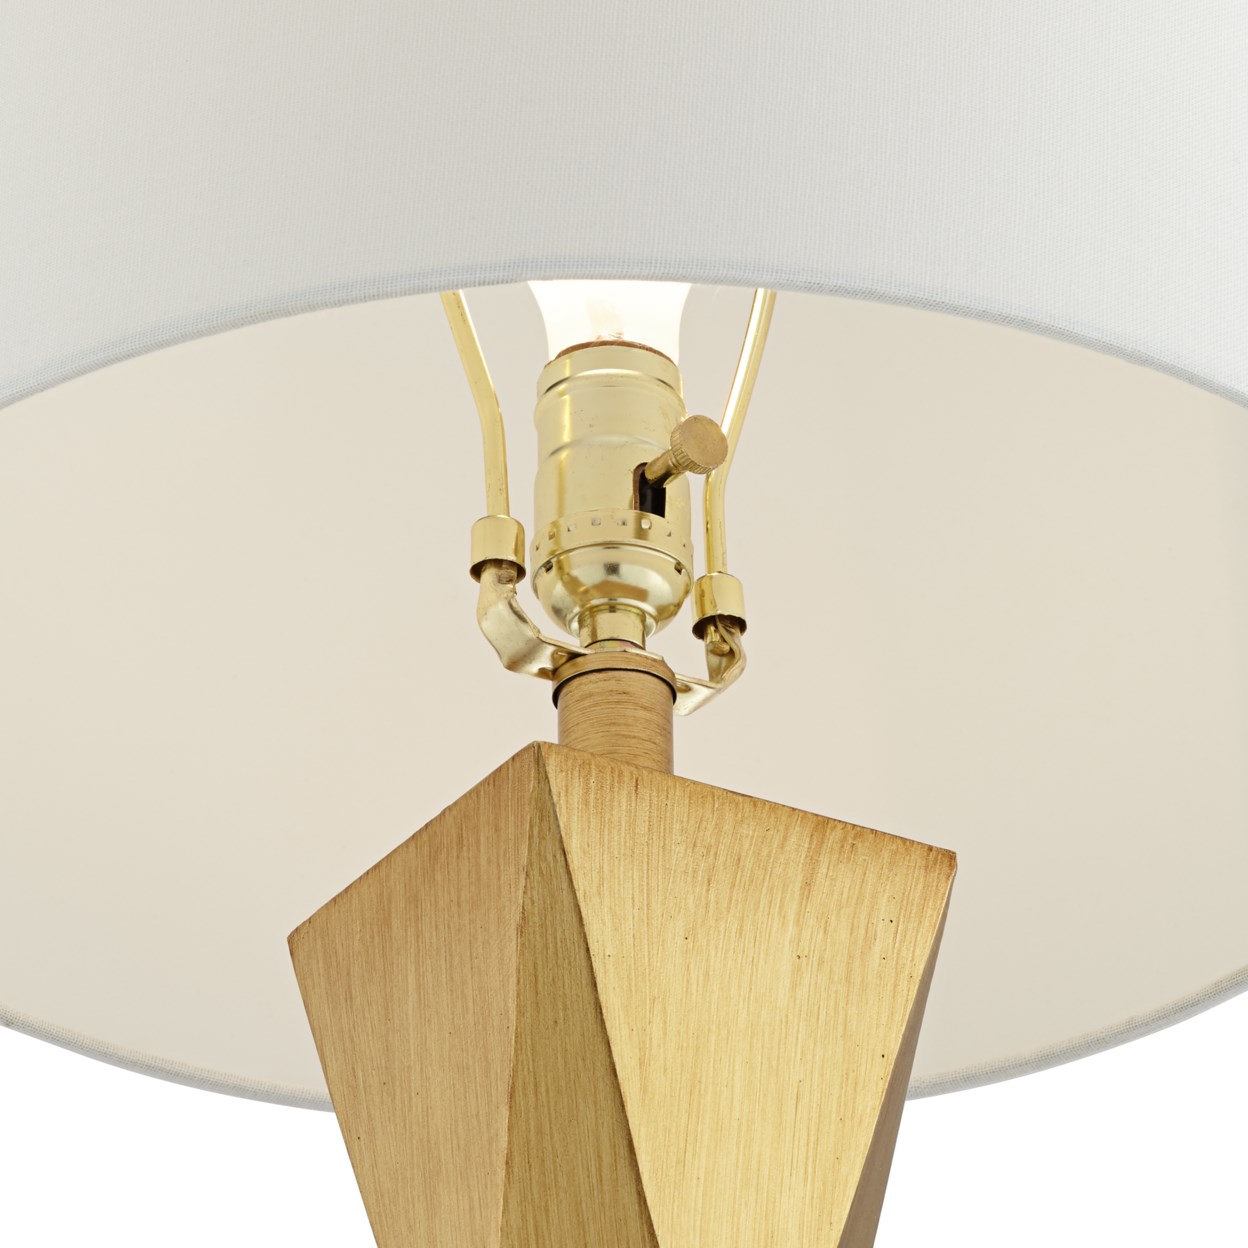 Pacific Coast Lighting Lamp Sets TL-Quadrangle brushed gold  set of 2